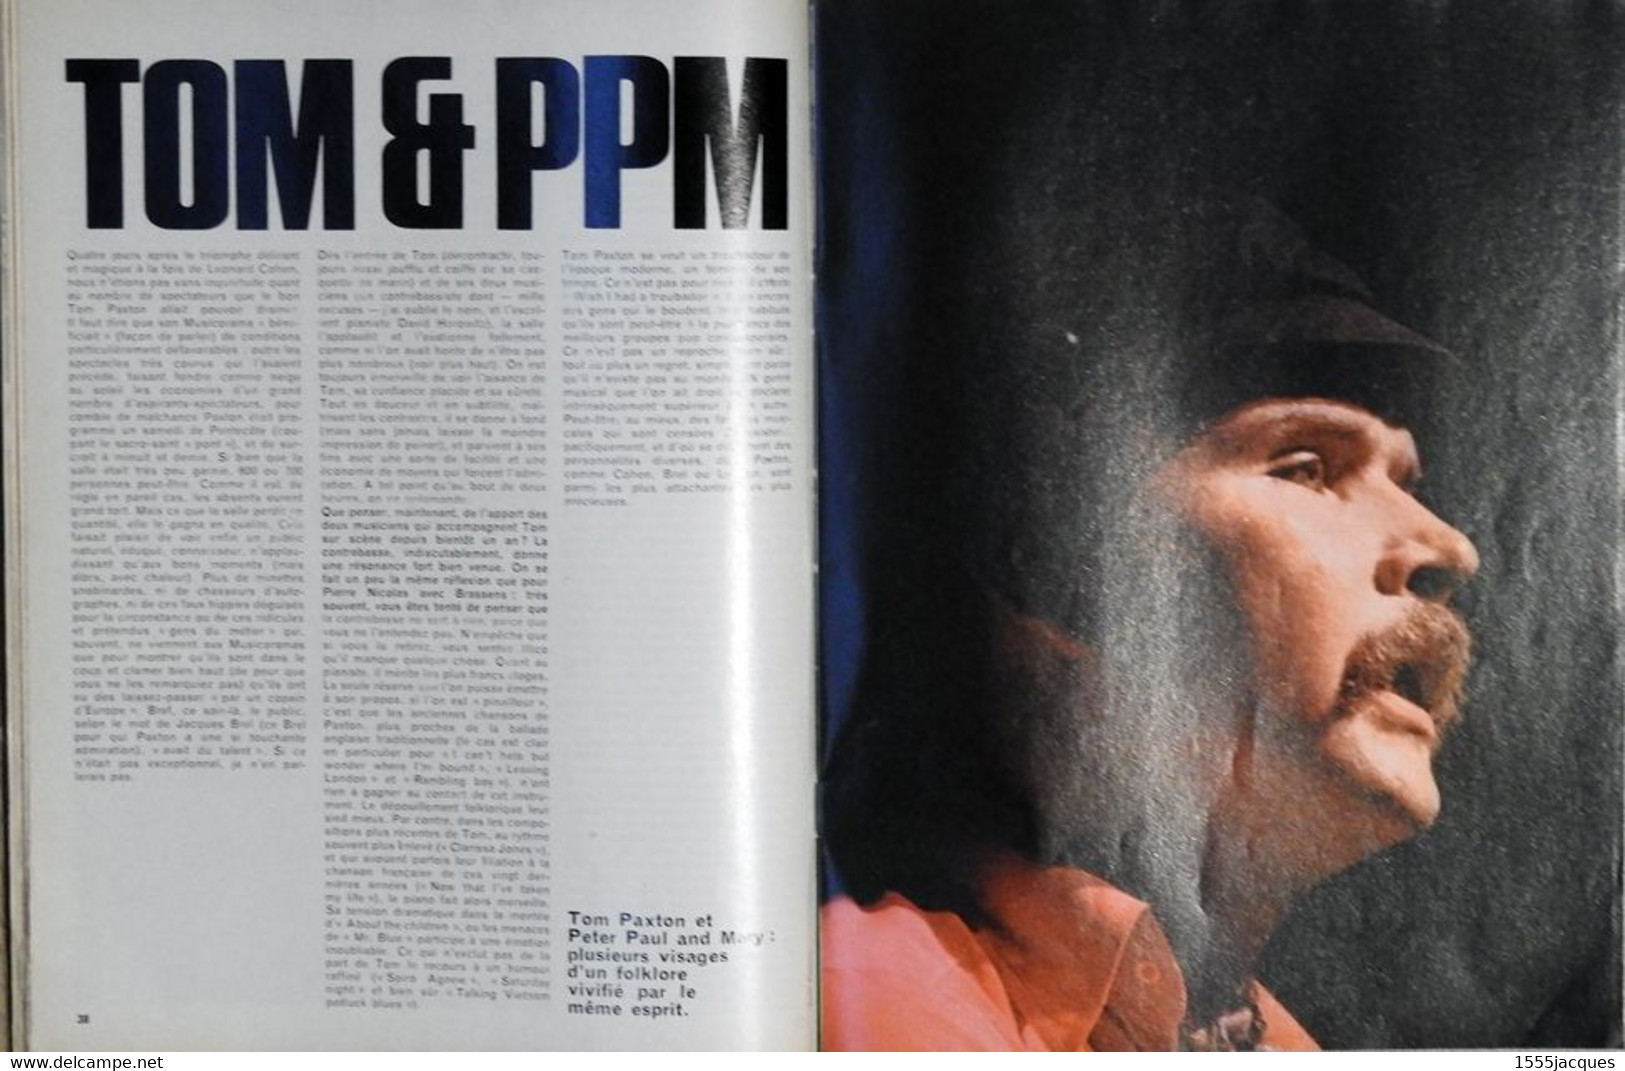 MAGAZINE ROCK & FOLK N° 42 07-1970 FRANK ZAPPA ERIC CLAPTON TOM PAXTON WEST POP 3 JOHNNY KIDD MICHAEL WADLEIGH GOA - Musique